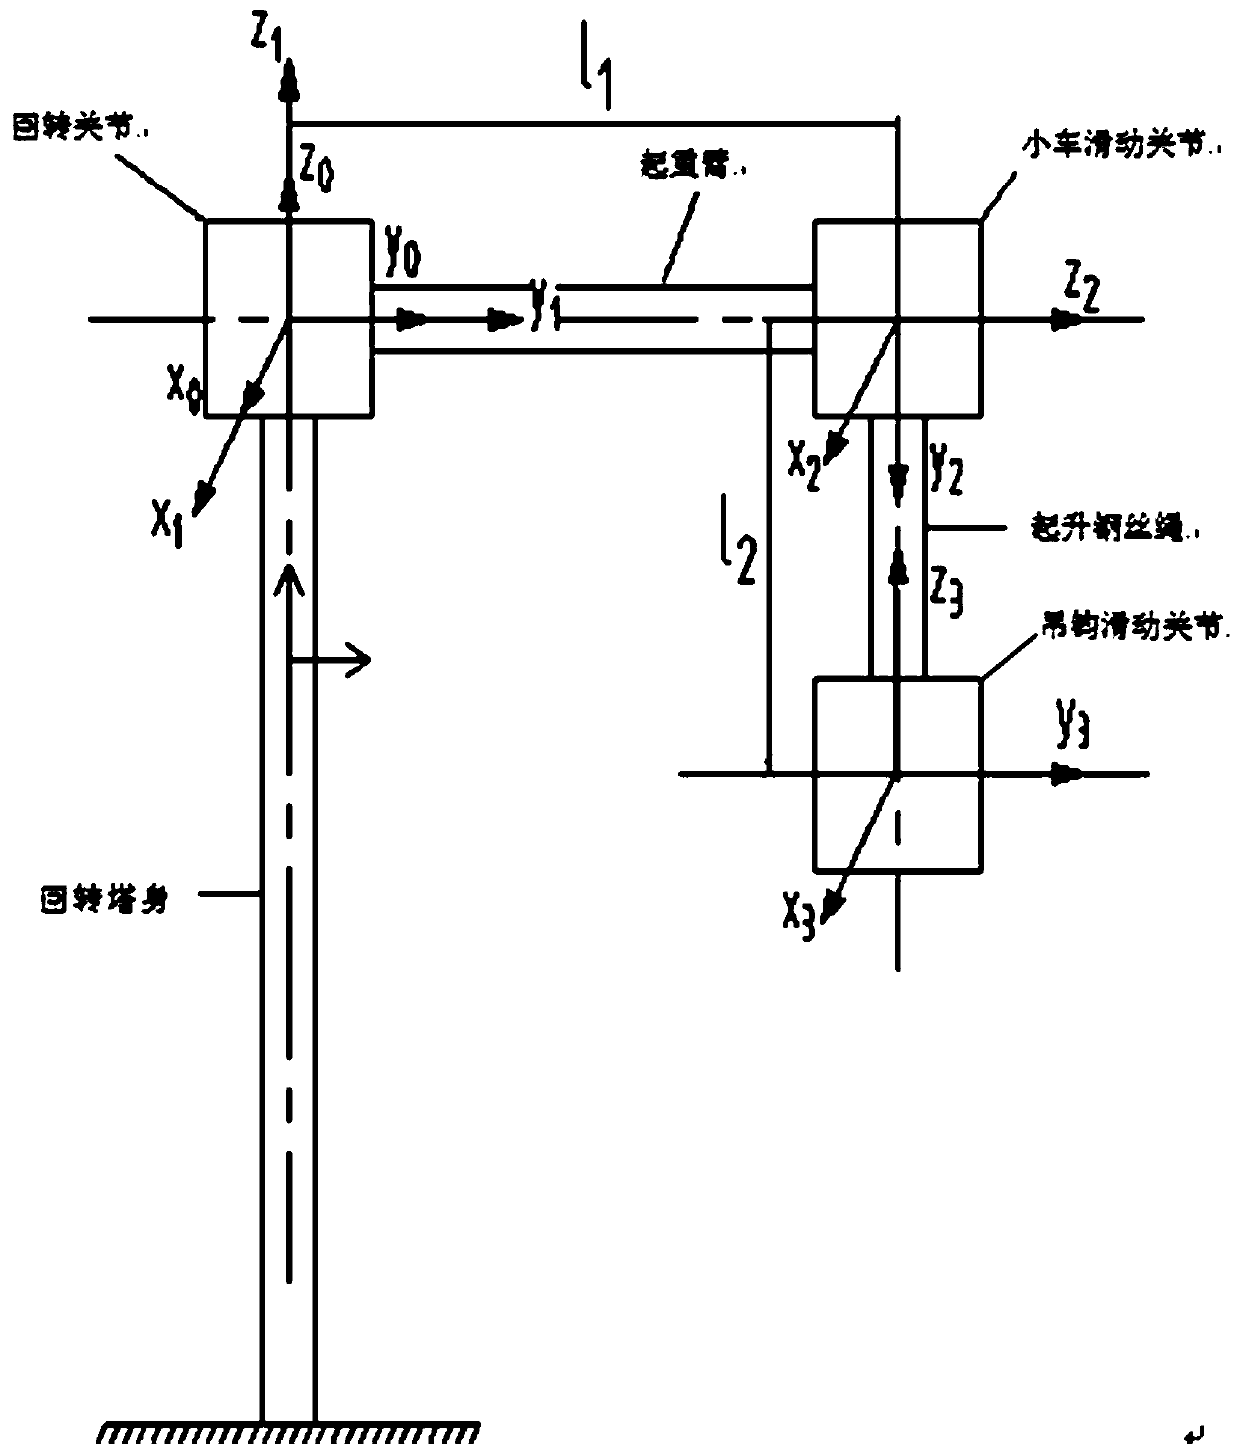 Tower crane movement planning method based on energy consumption optimization